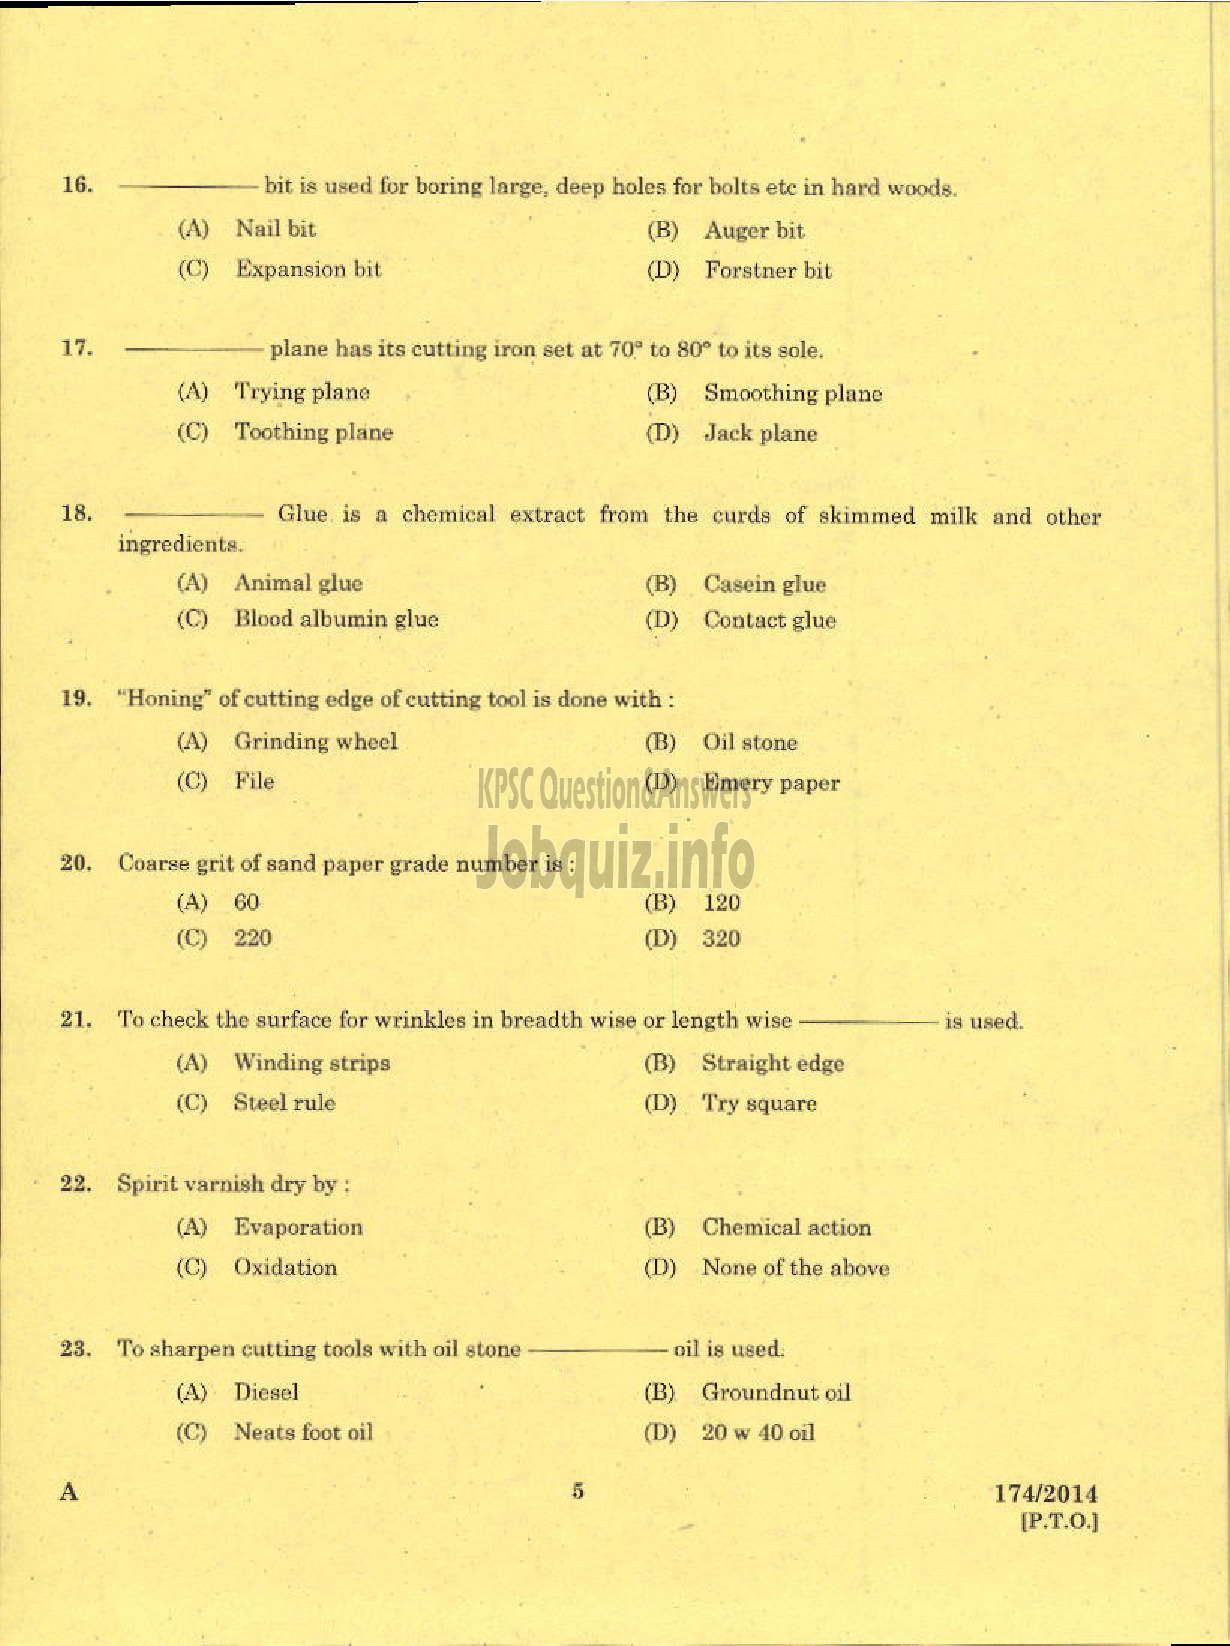 Kerala PSC Question Paper - TRADESMAN CARPENTRY TECHNICAL EDUCATION TVPM PTA ALP IDK EKM WYD AND KGD DIST-3